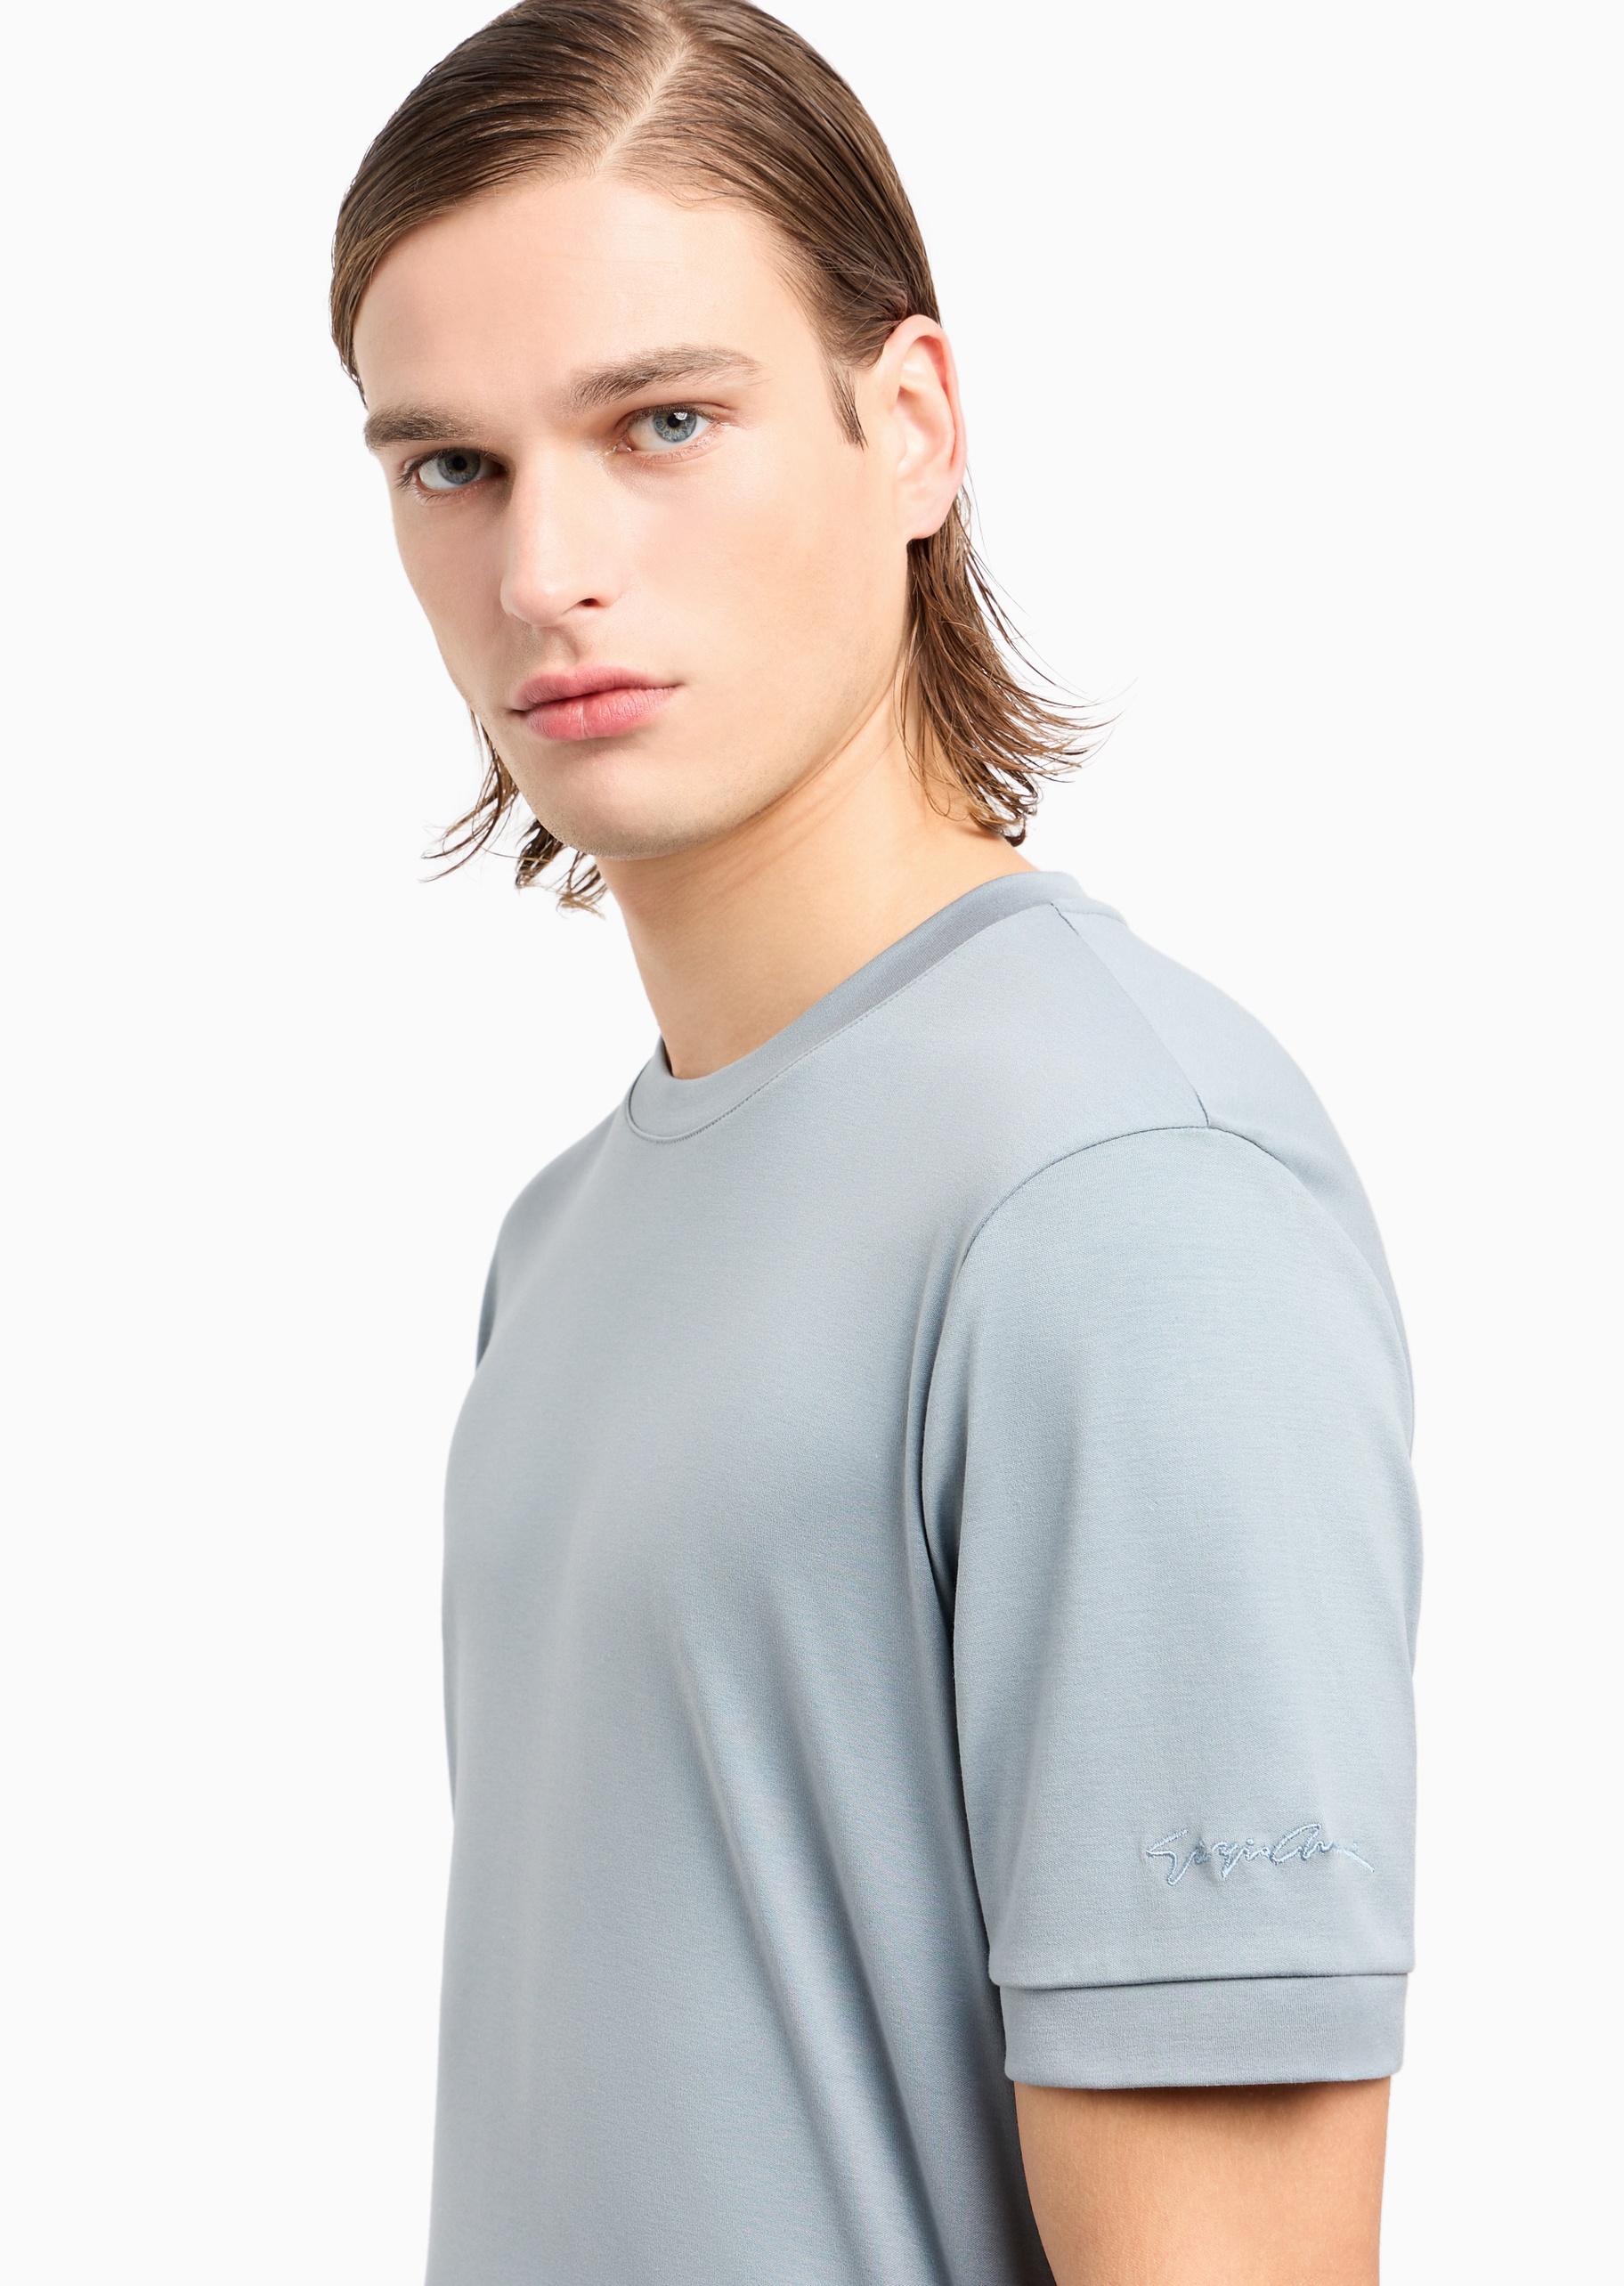 Giorgio Armani 男士全棉合身短袖圆领刺绣纯色T恤